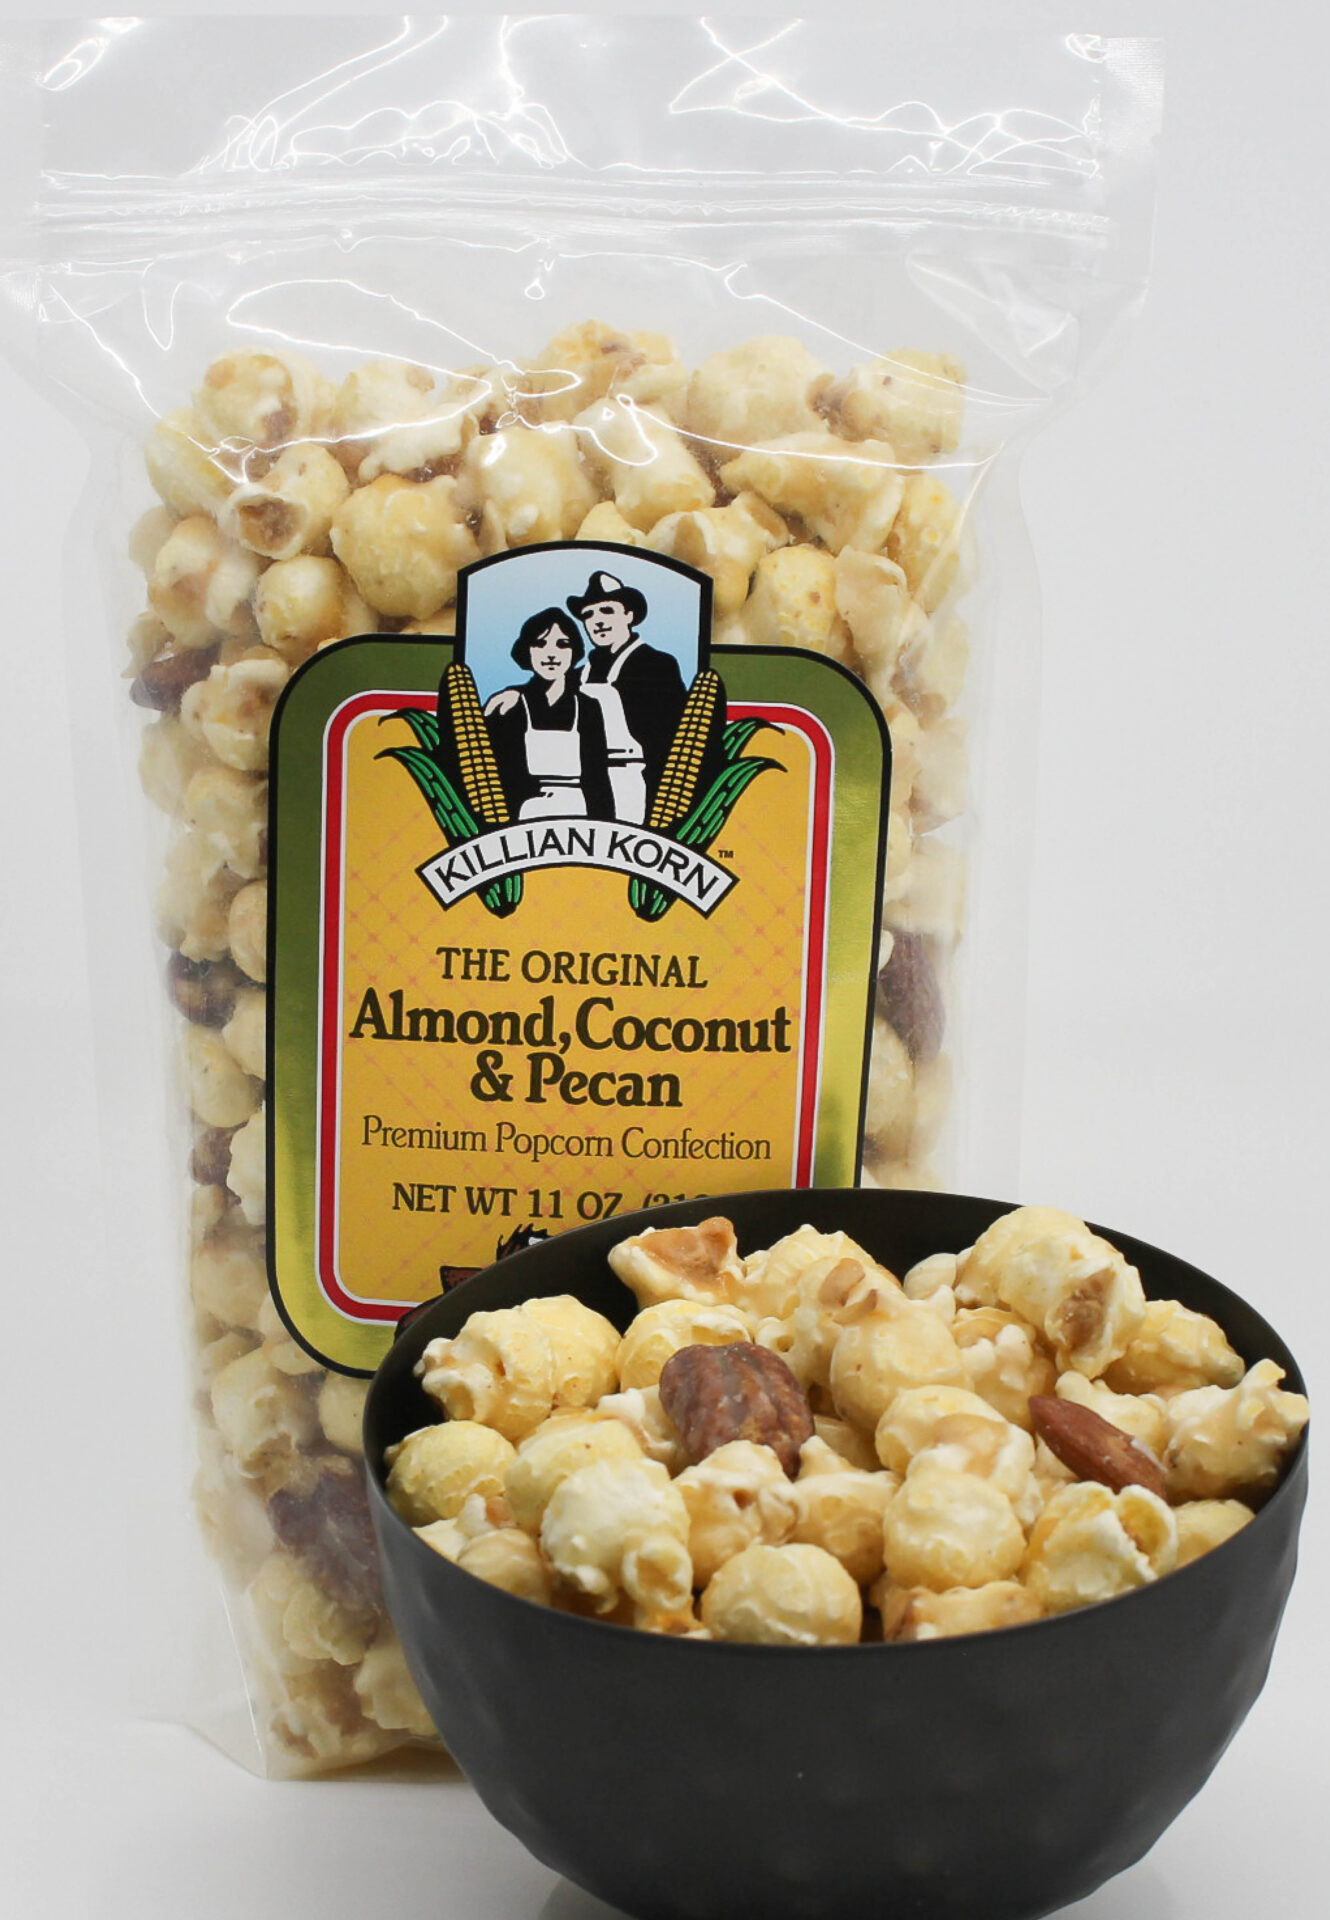 The Original Flavored Popcorn